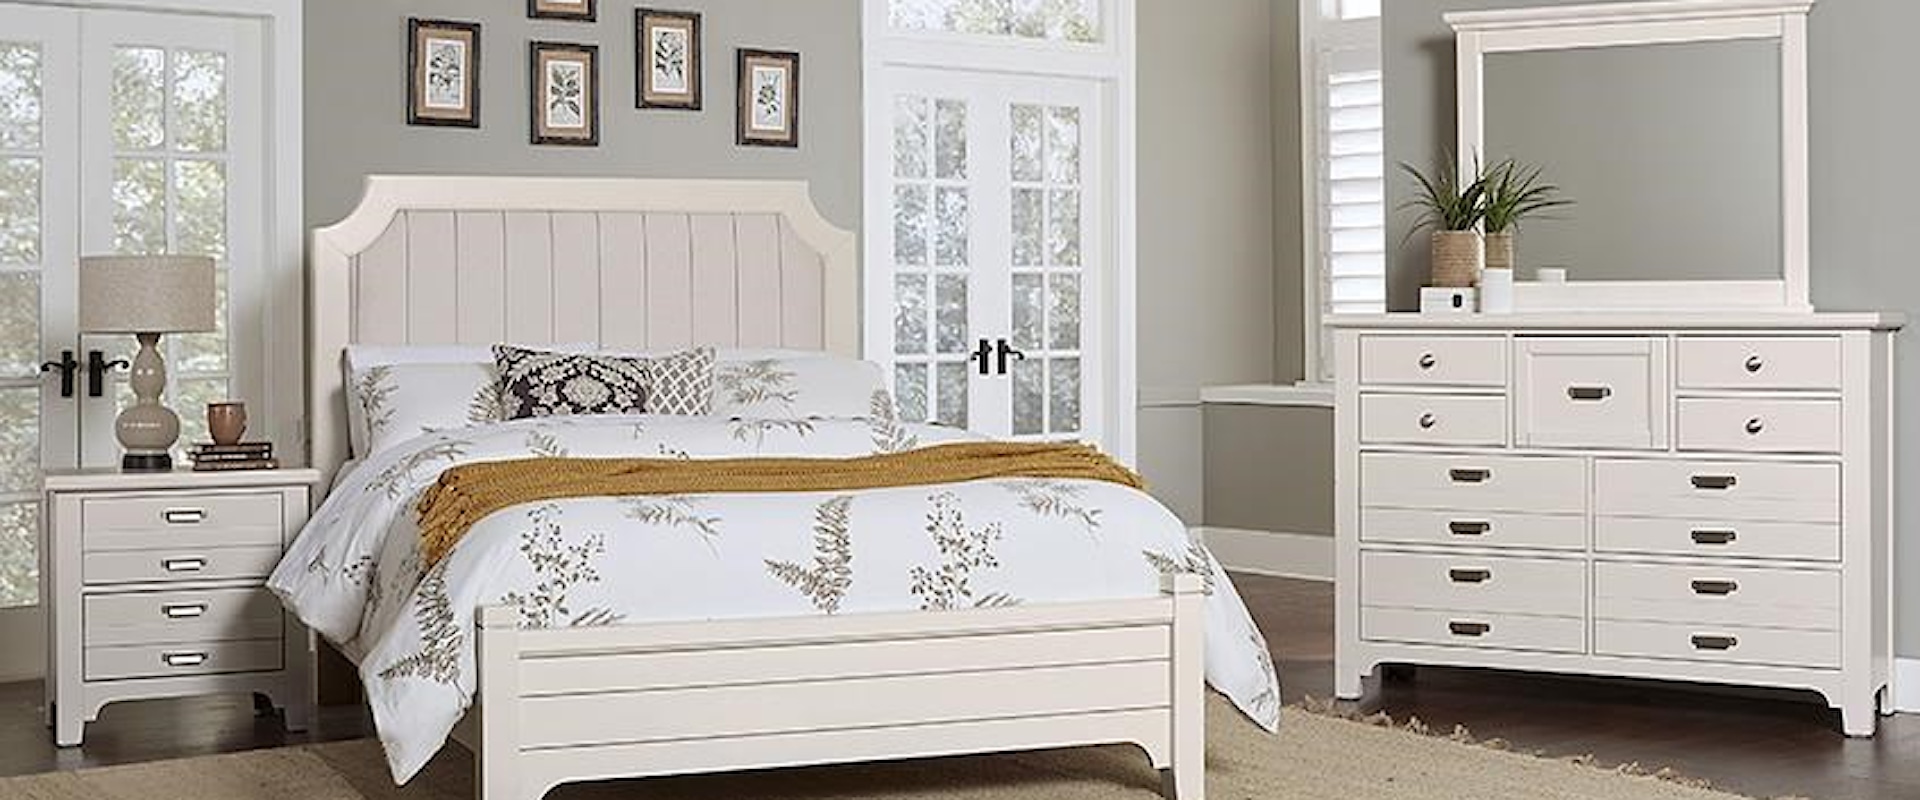 Queen Upholstered Bed, 9 Drawer Dresser, Master Landscape Mirror, 2 Drawer Nightstand